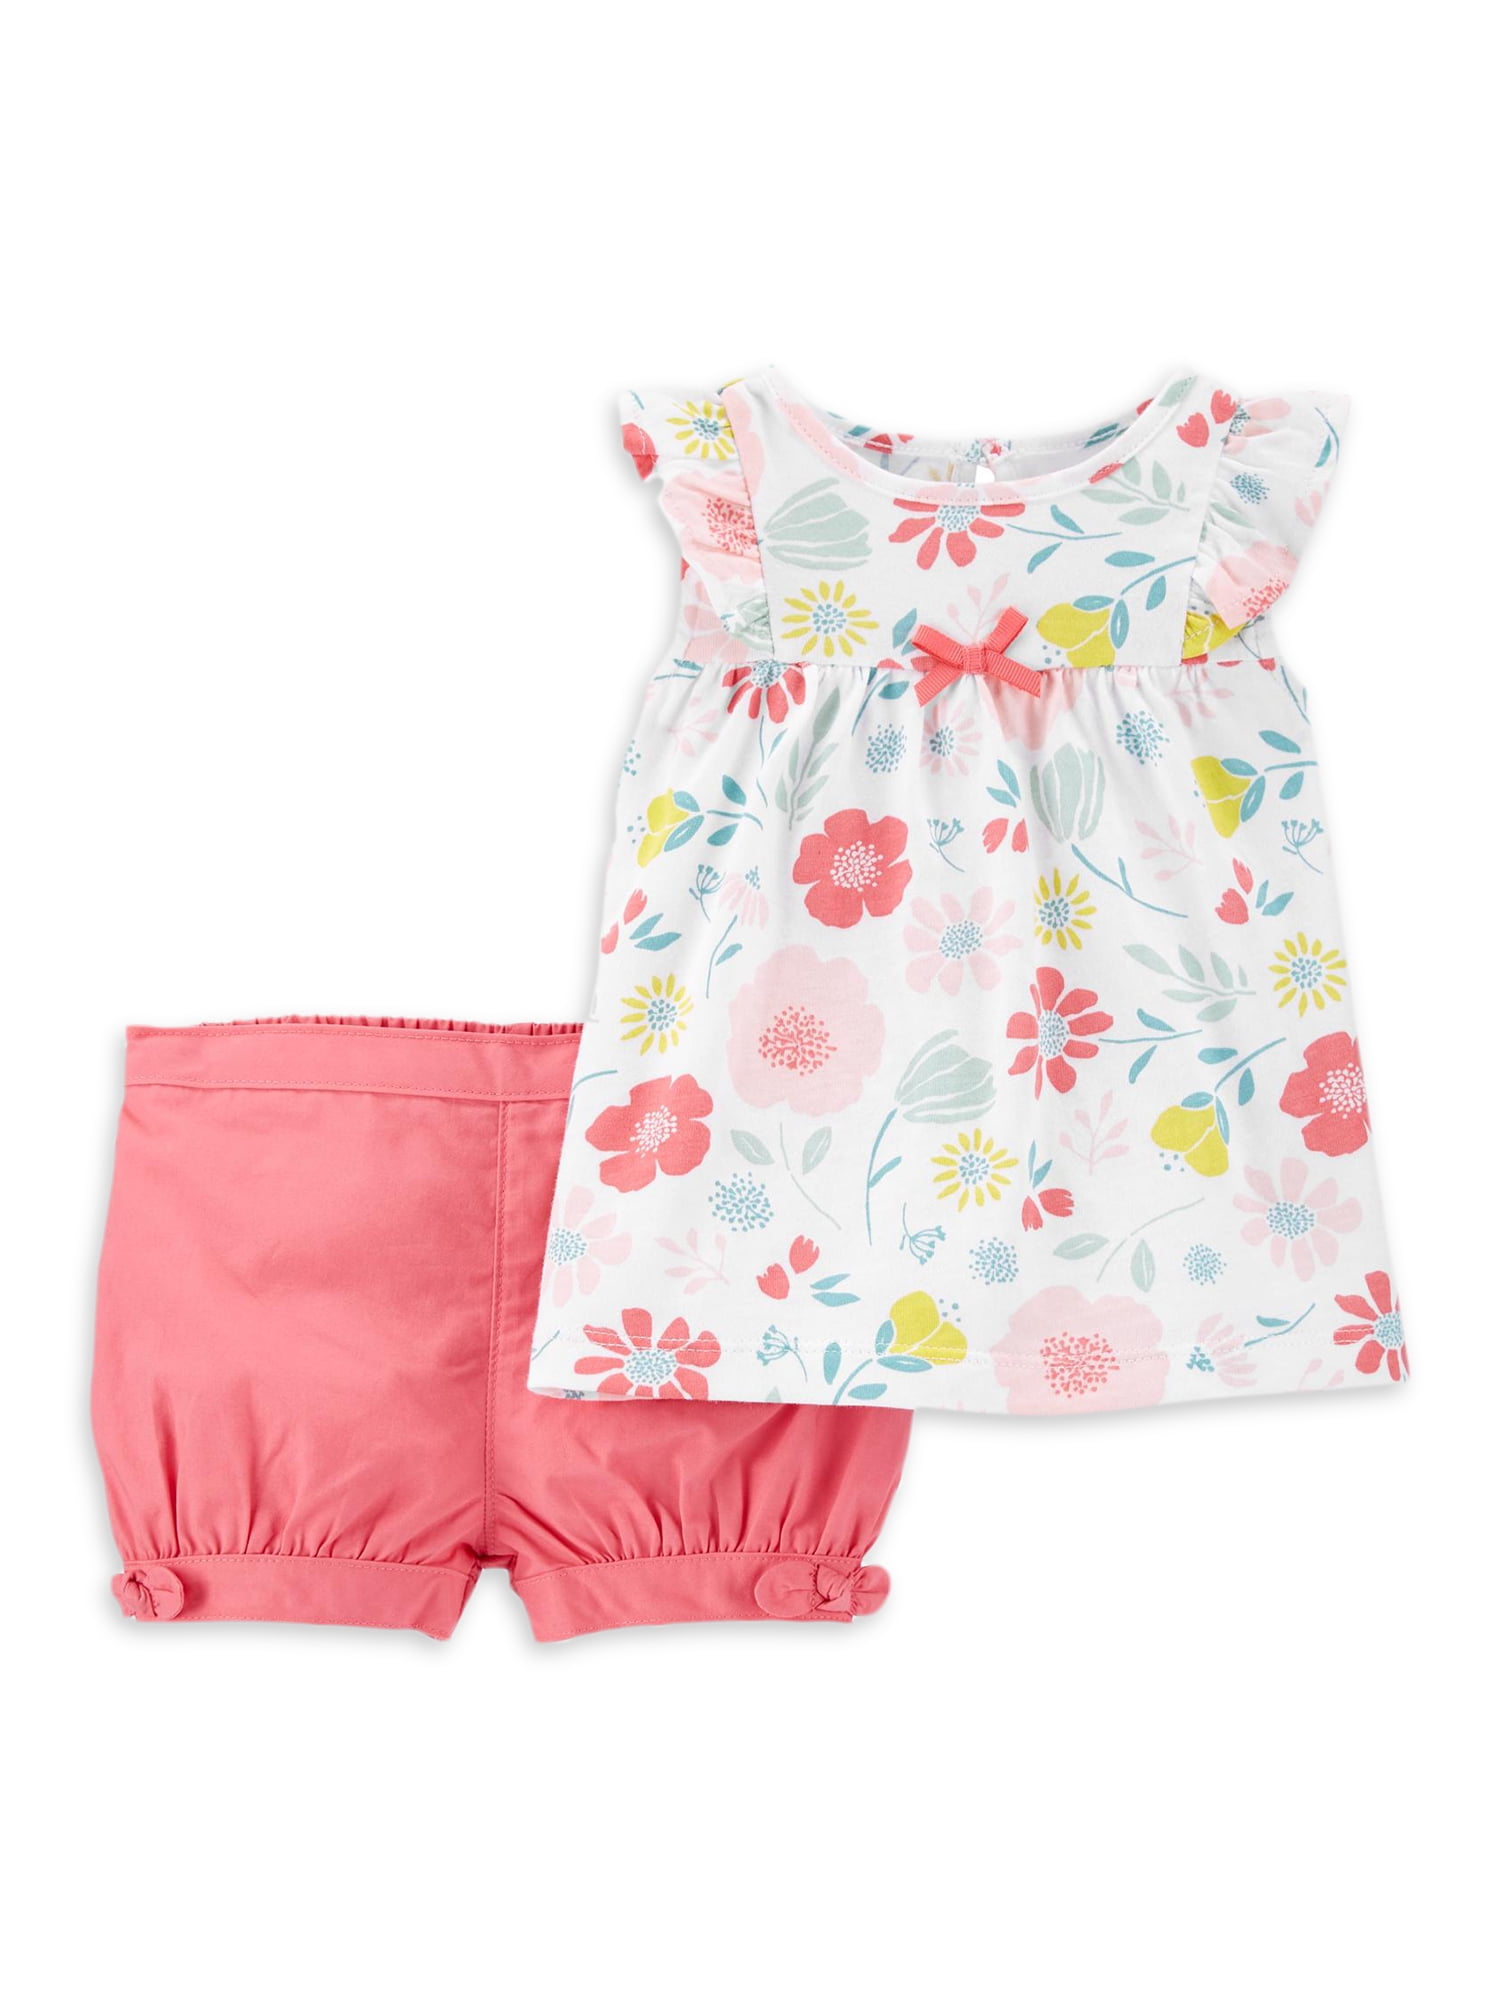 Details about   2Pcs Kids Baby Girls Summer Outfits Grid Short Sleeve Princess Dress Shorts Set 